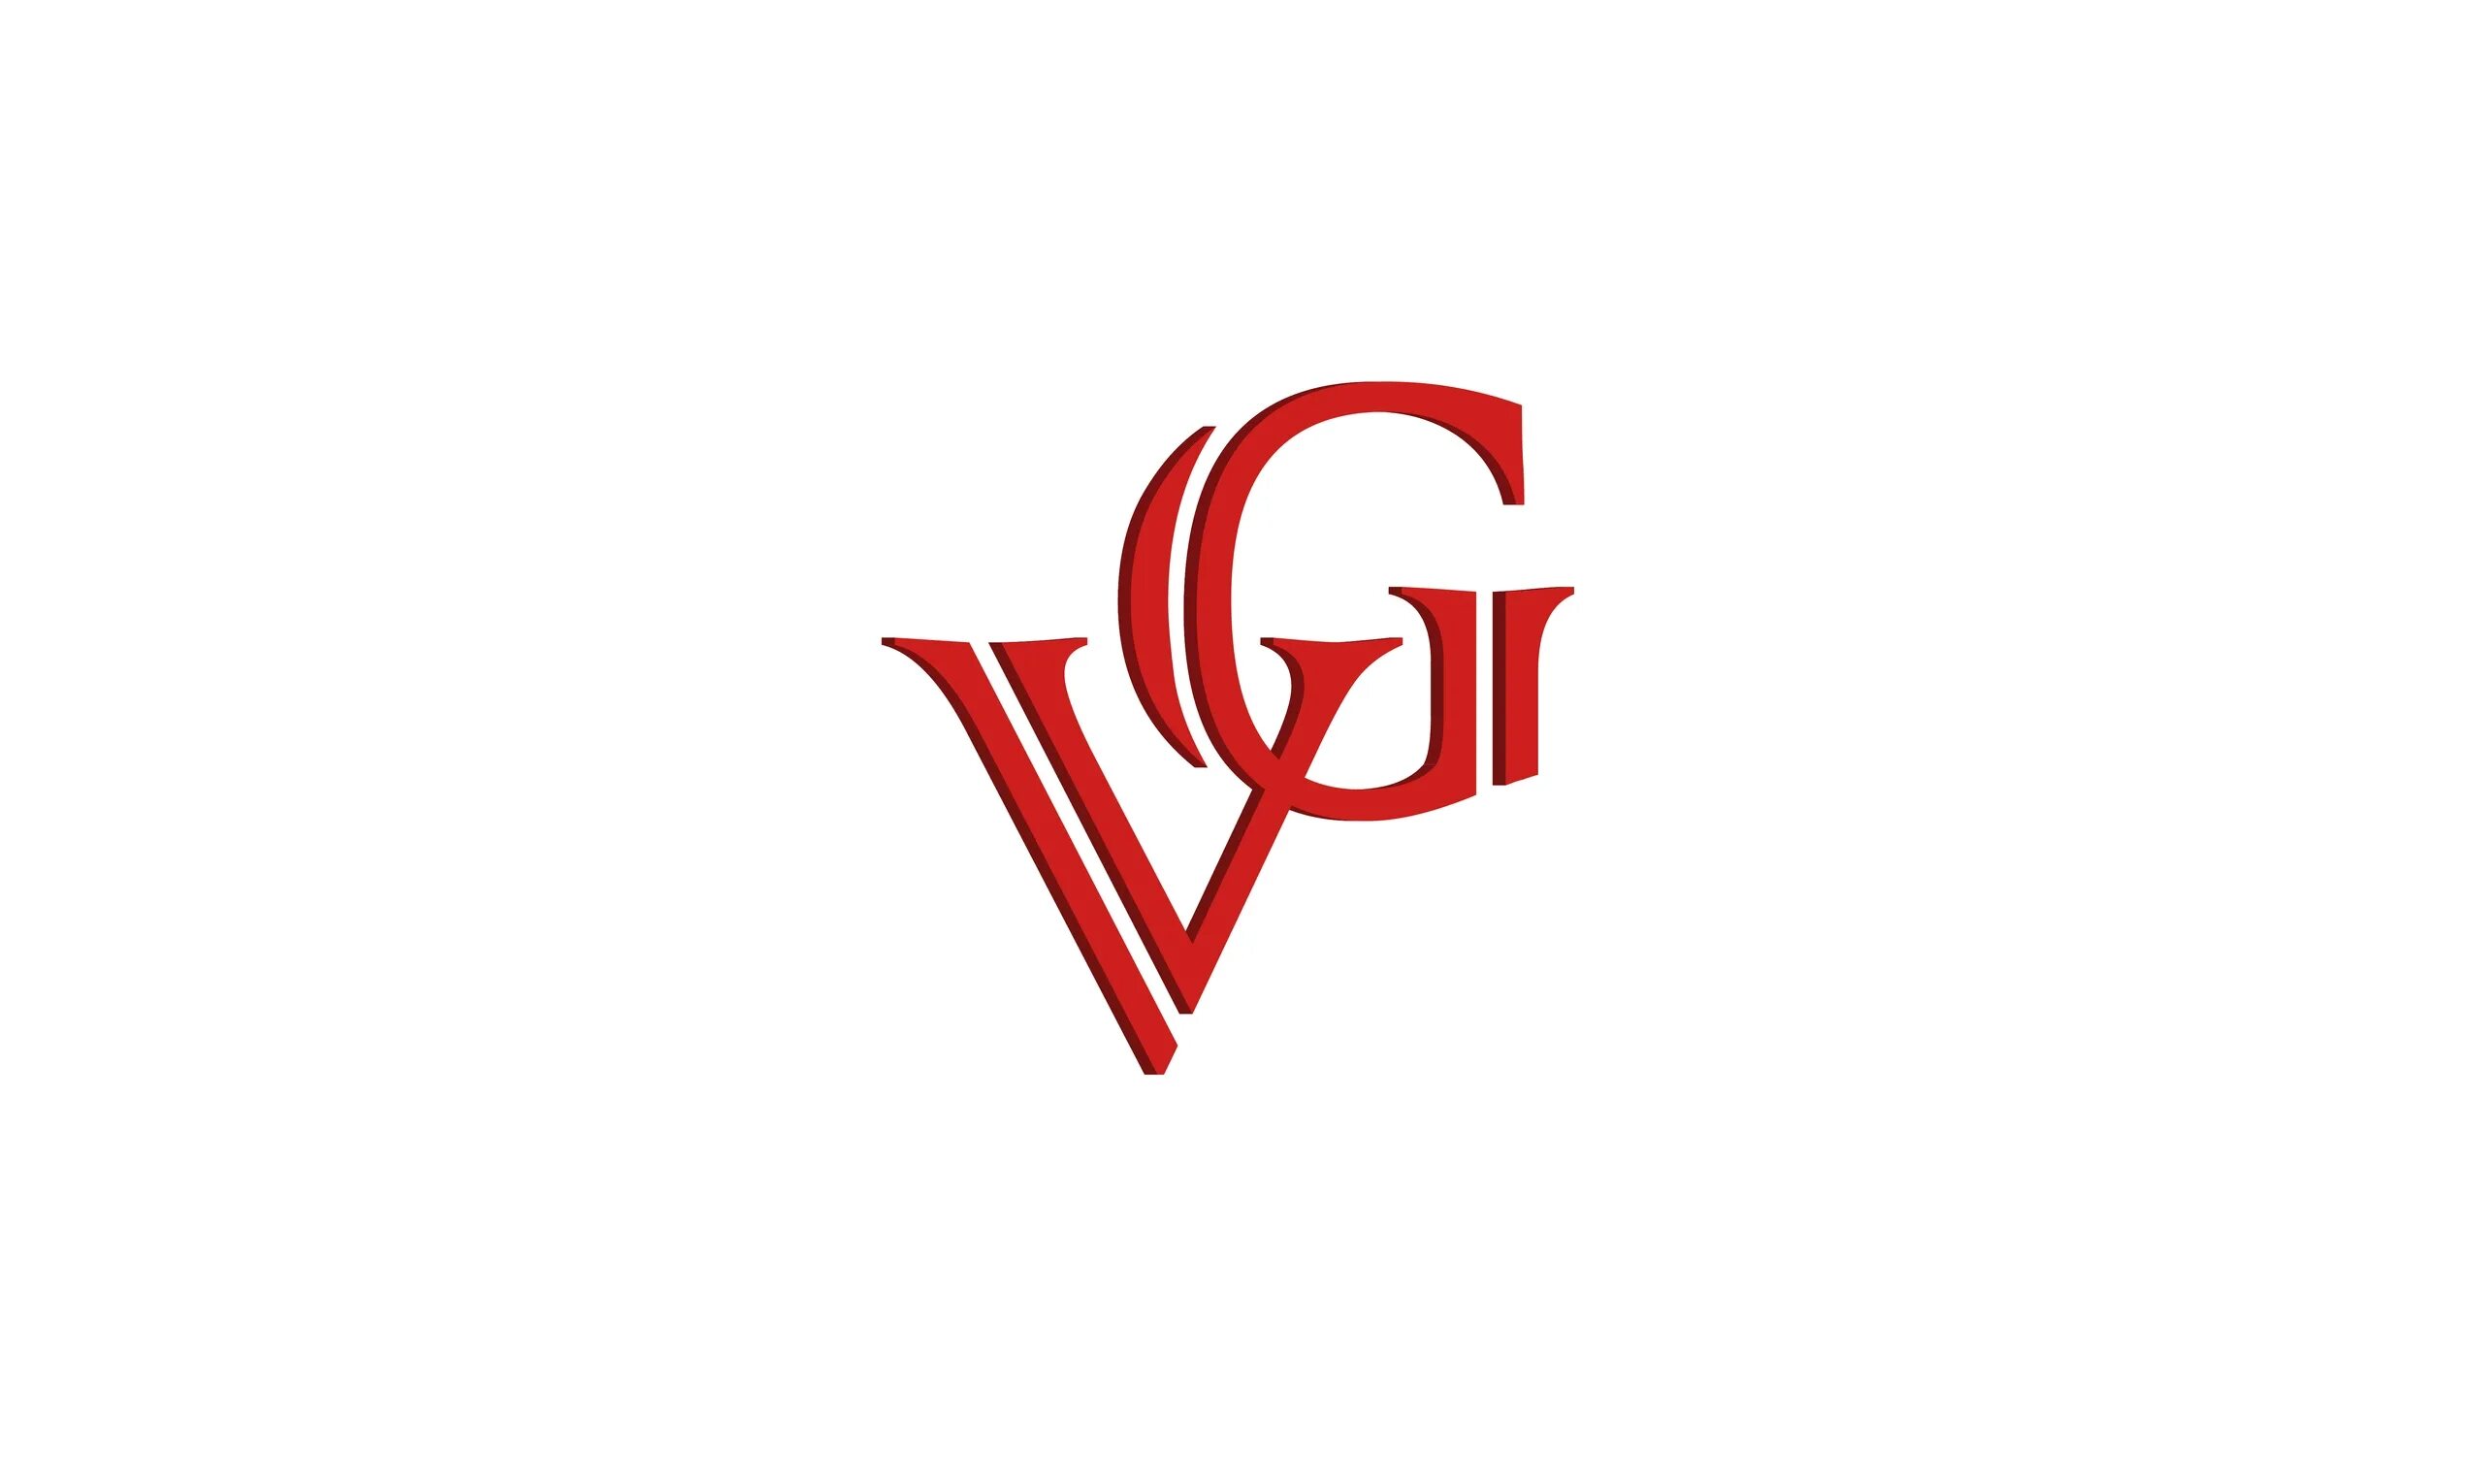 Логотип v. Логотип с буквой v. ВГ буквы. WG буквы логотип.